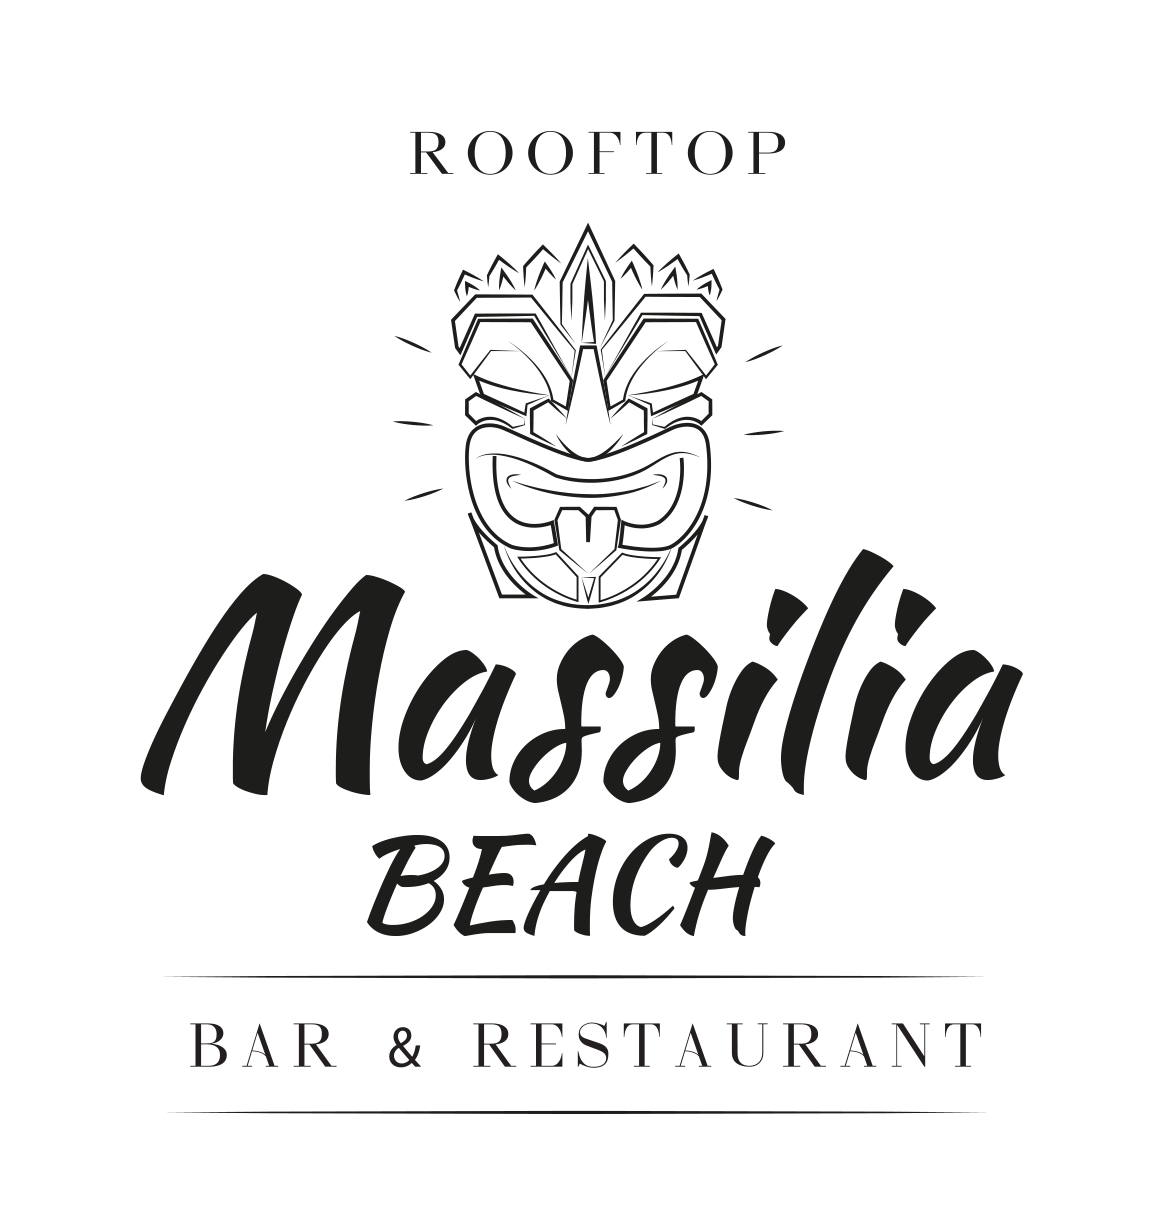 Logo Rooftop Massilia Beach